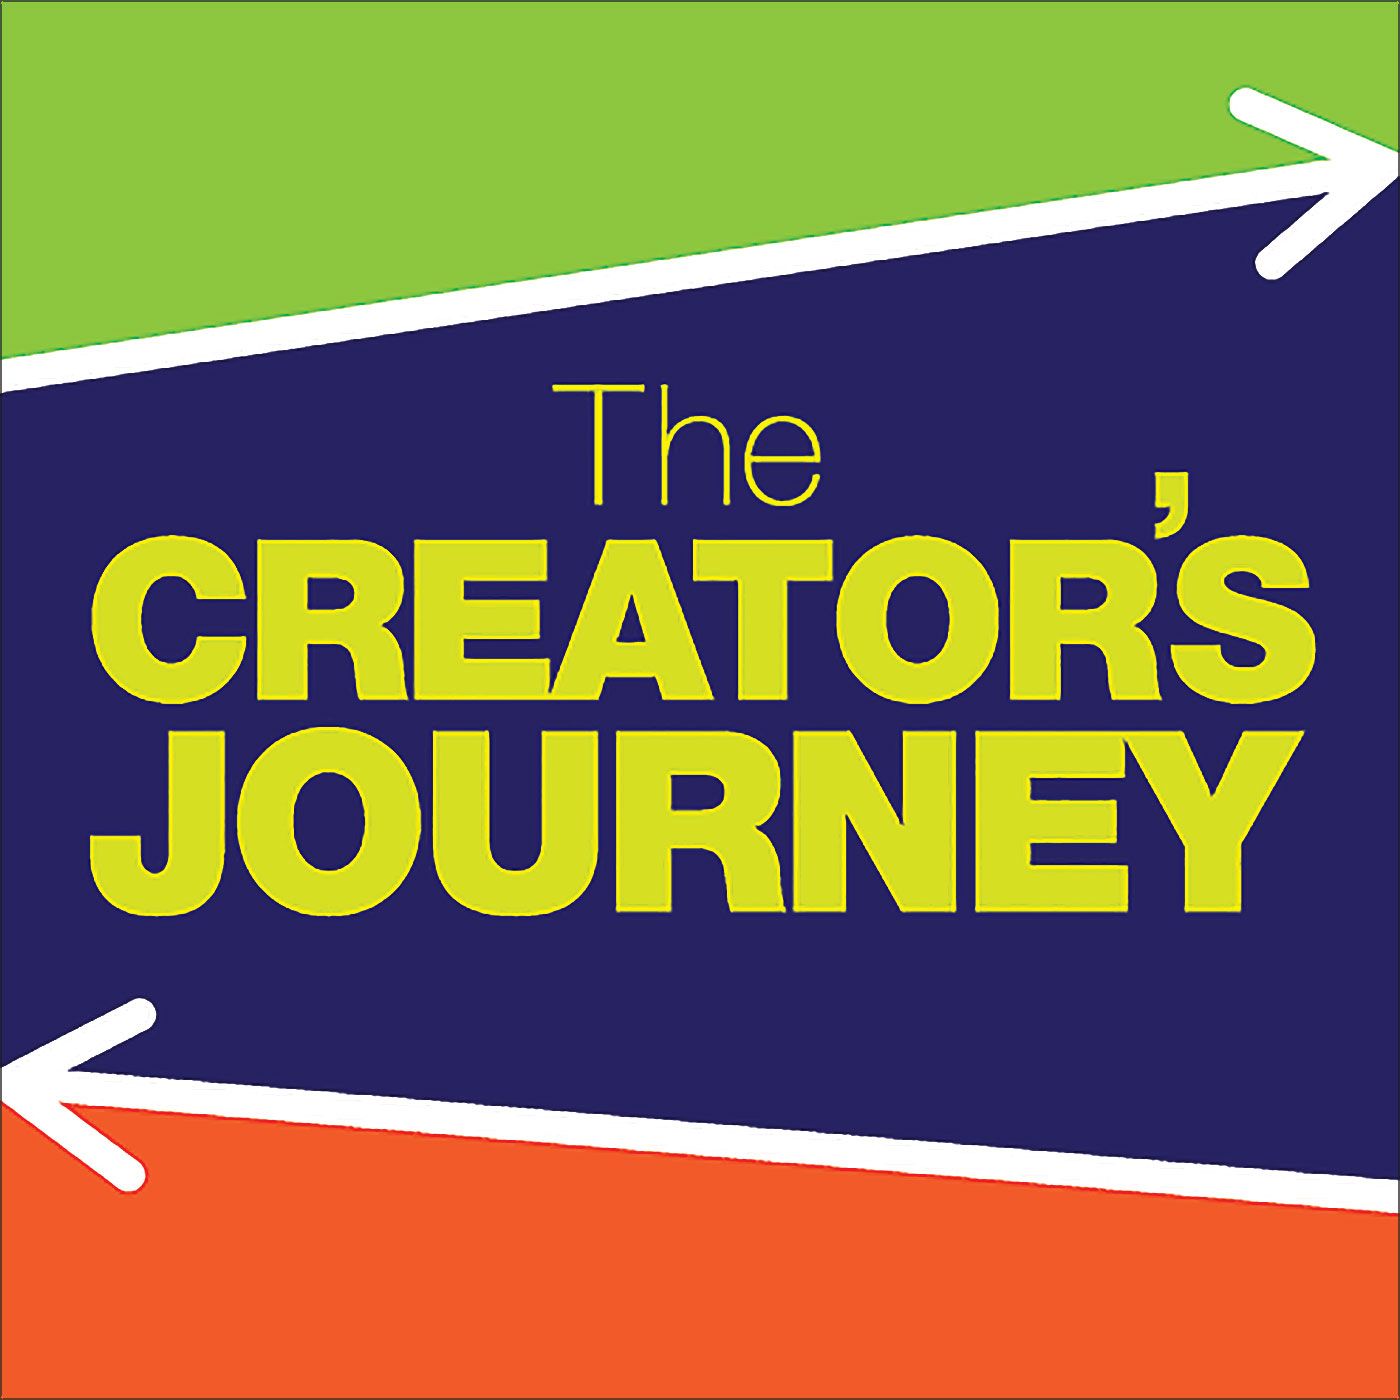 The Creator’s Journey tracks